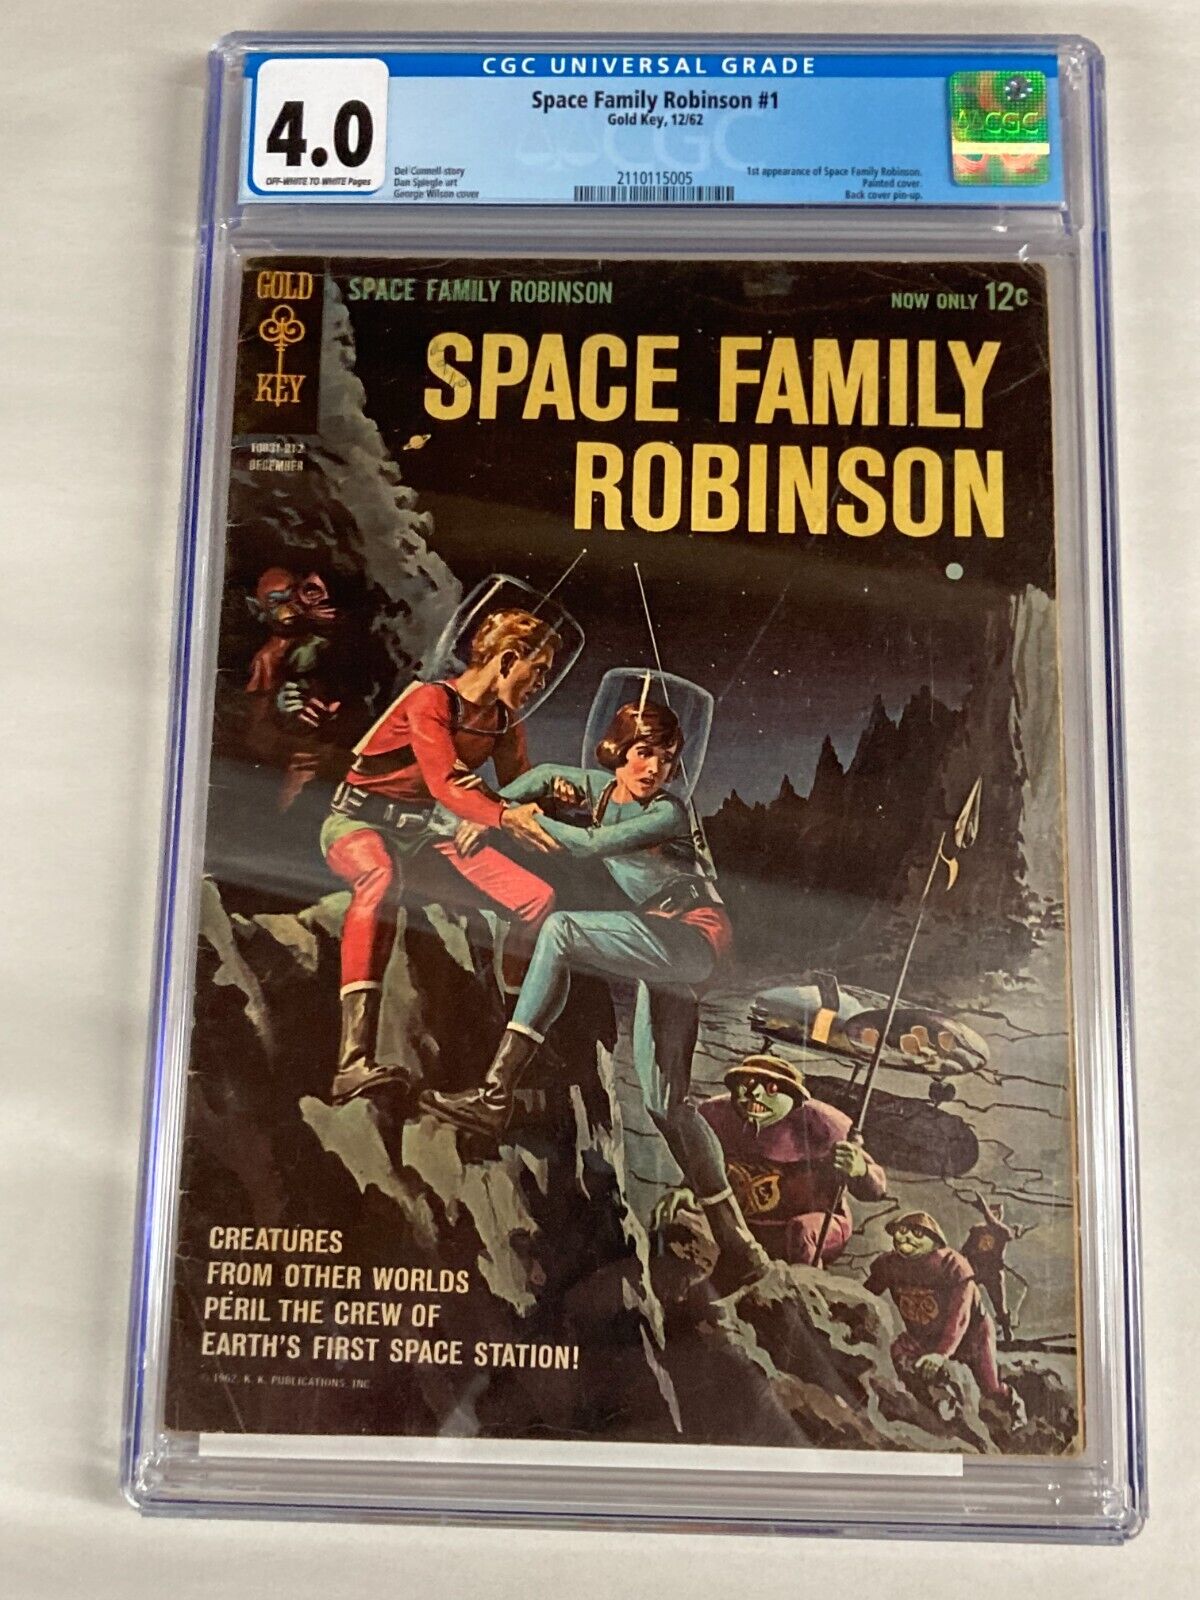 Space Family Robinson #1 Gold Key Comics 1962 CGC 4.0